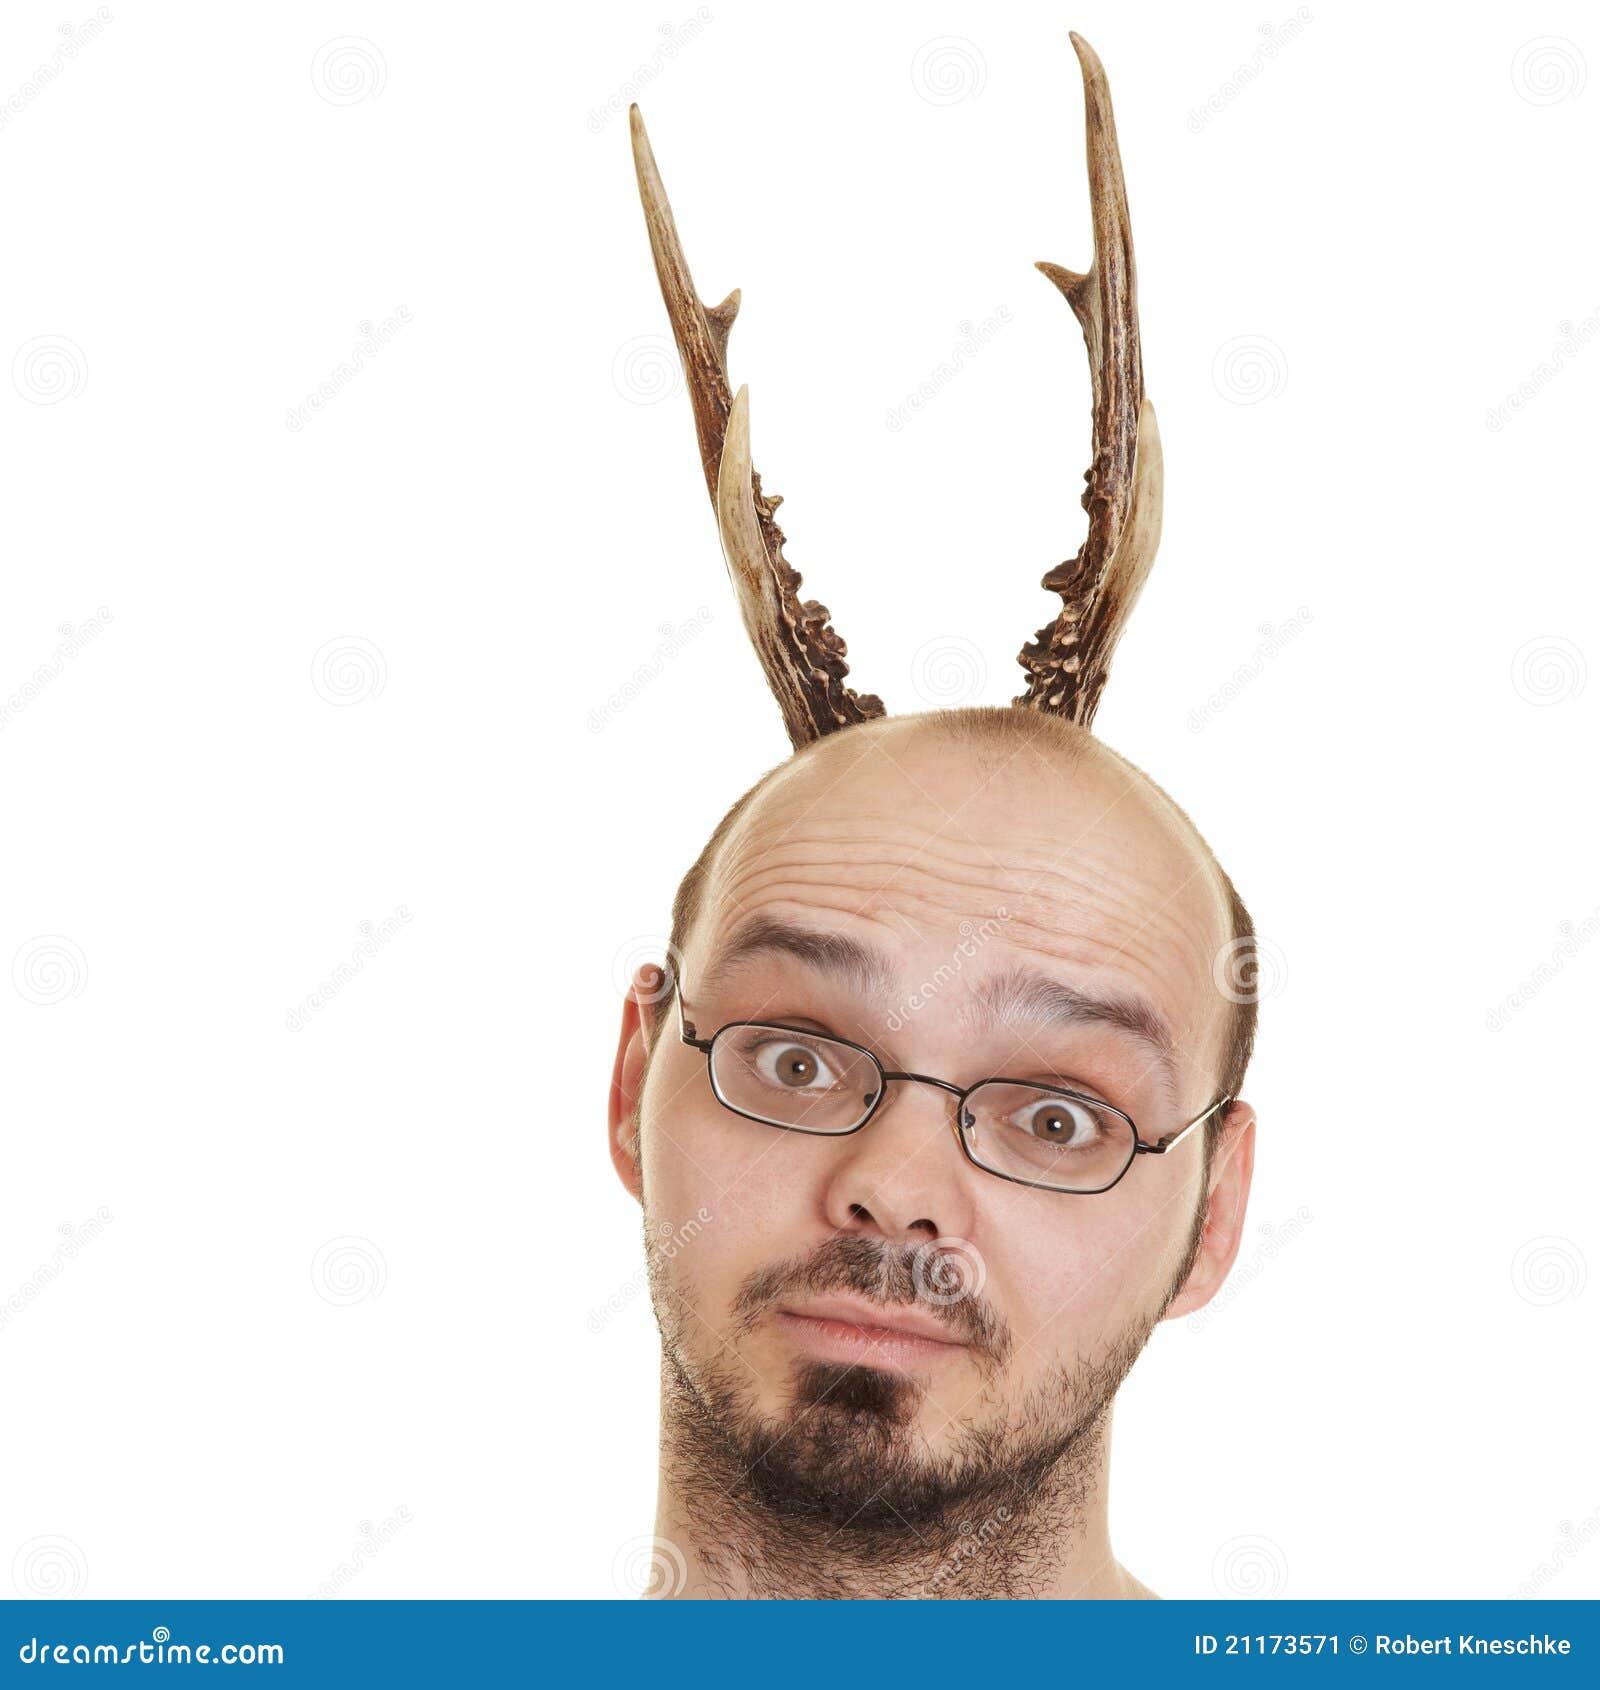 man-horns-head-21173571.jpg